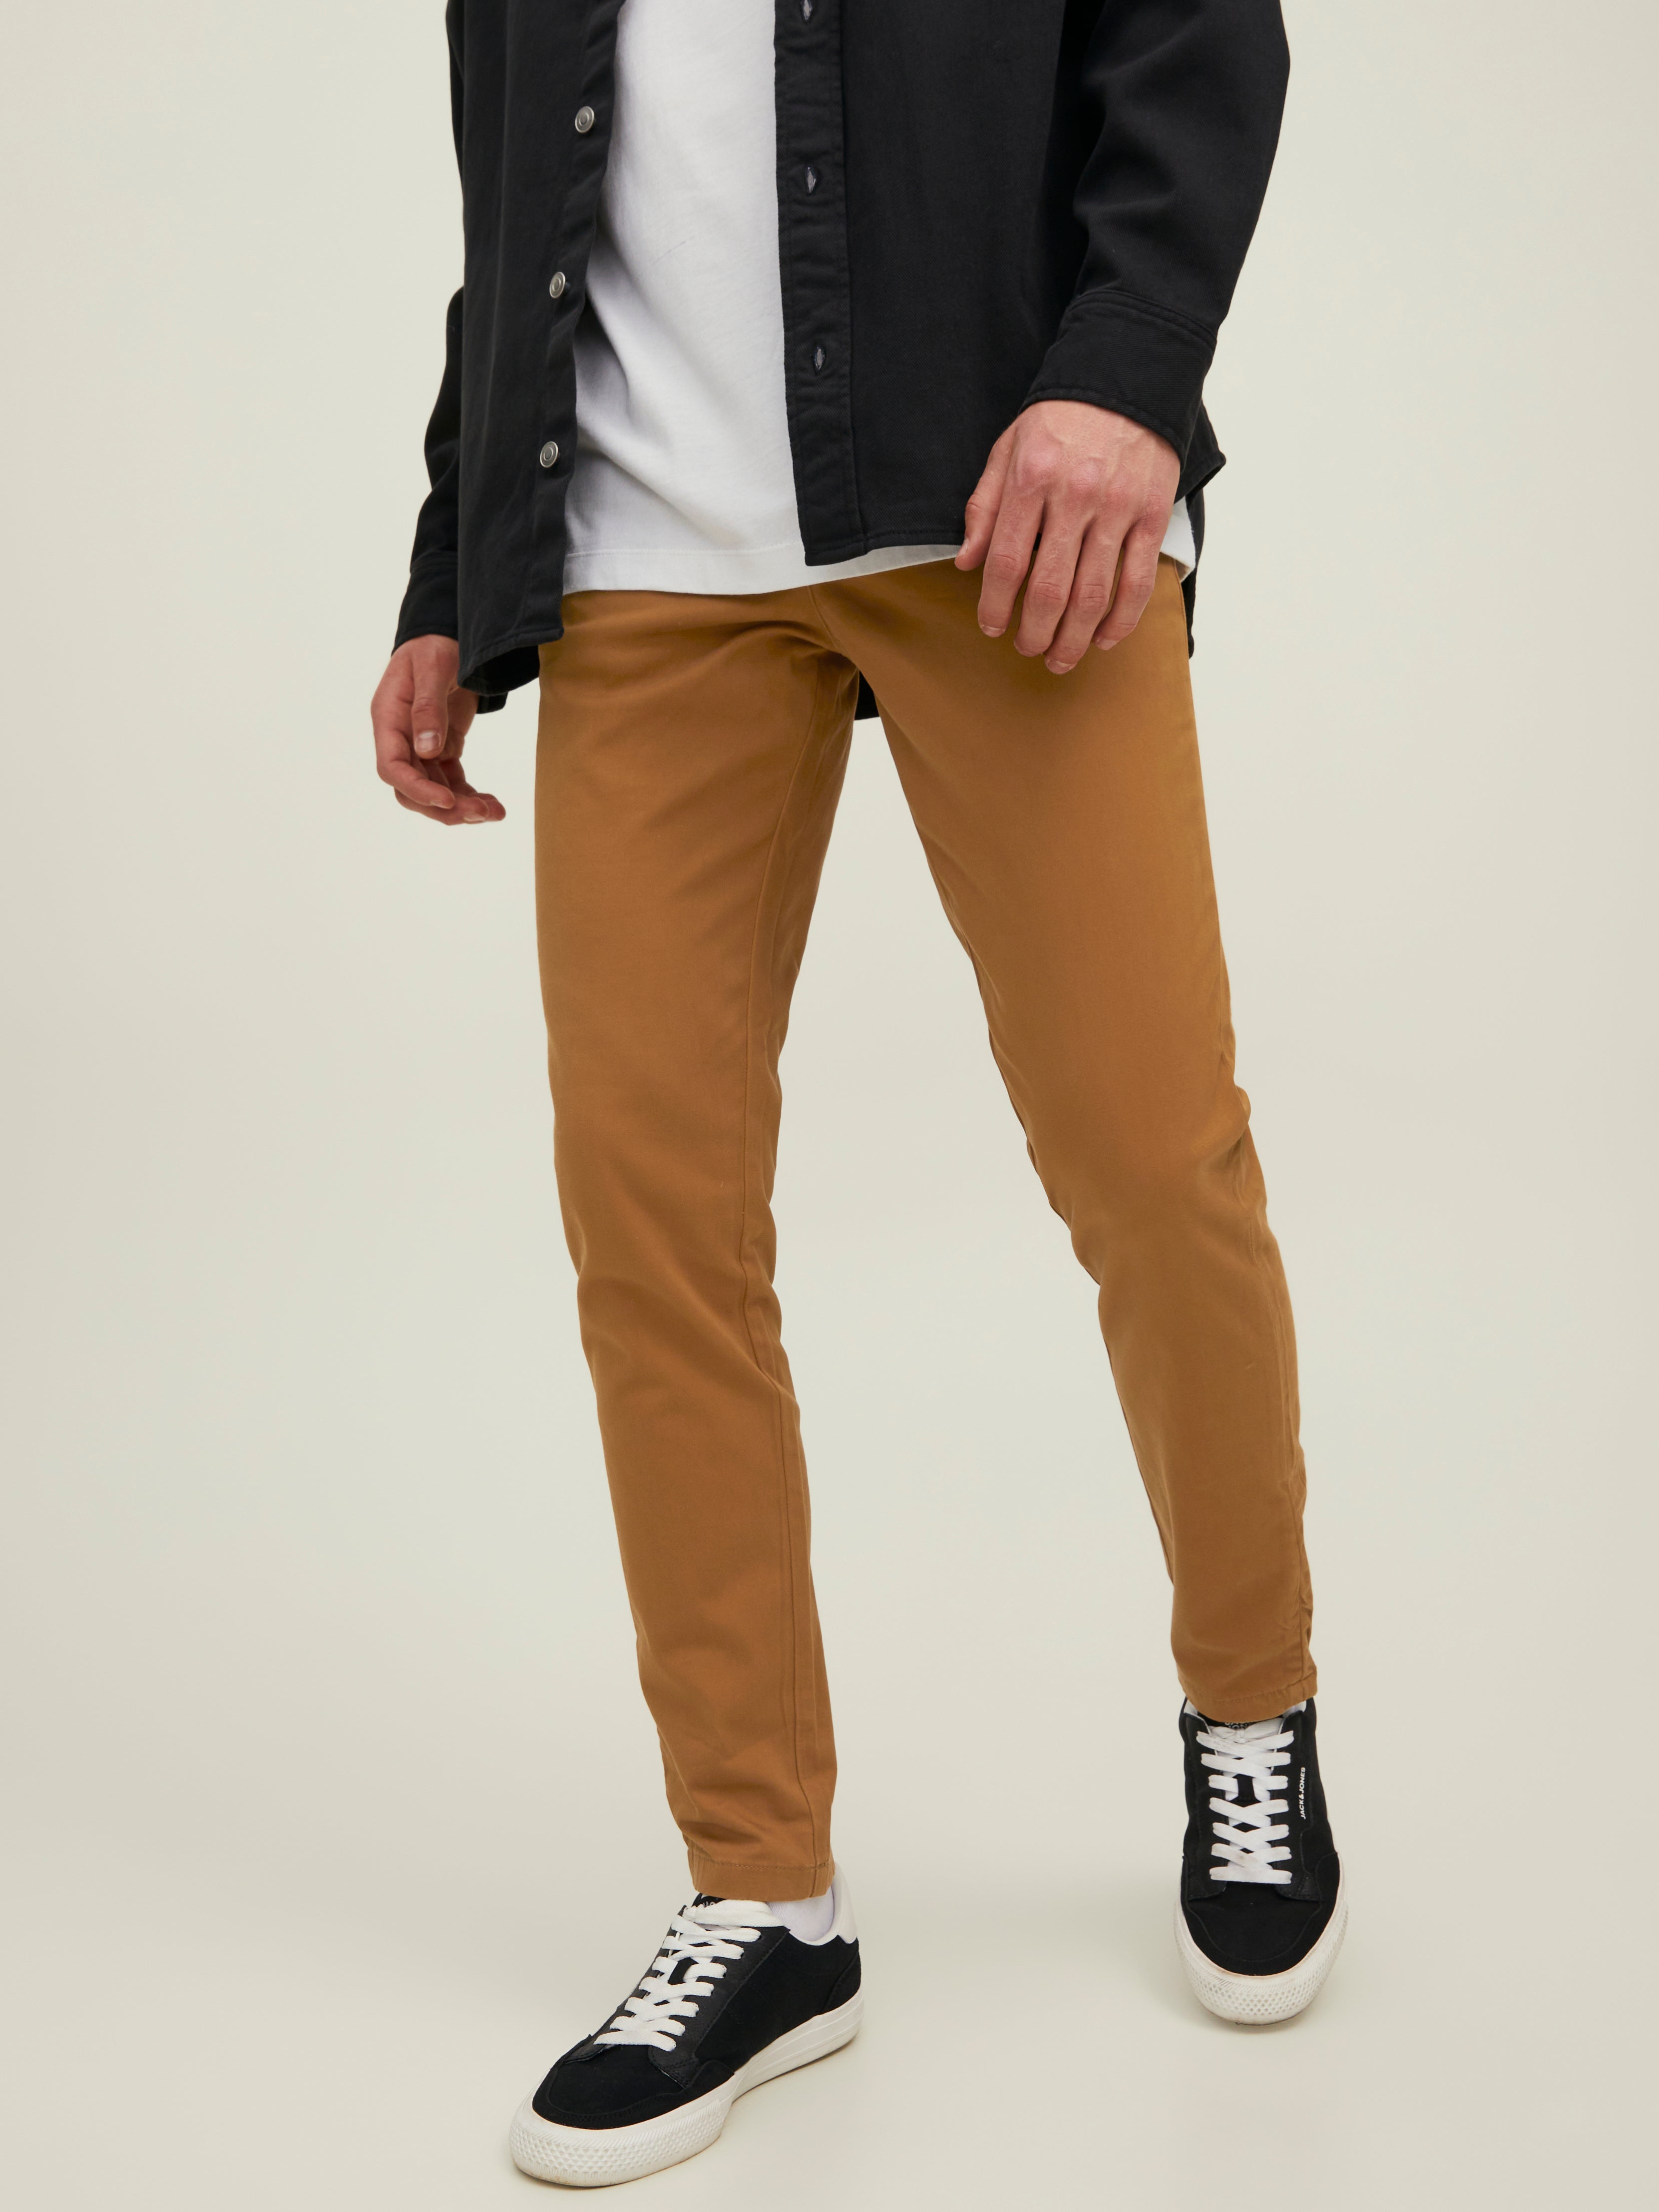 Sta Press Trousers 60s Style Mod Classic Burnt Orange Men's Trouser - Etsy